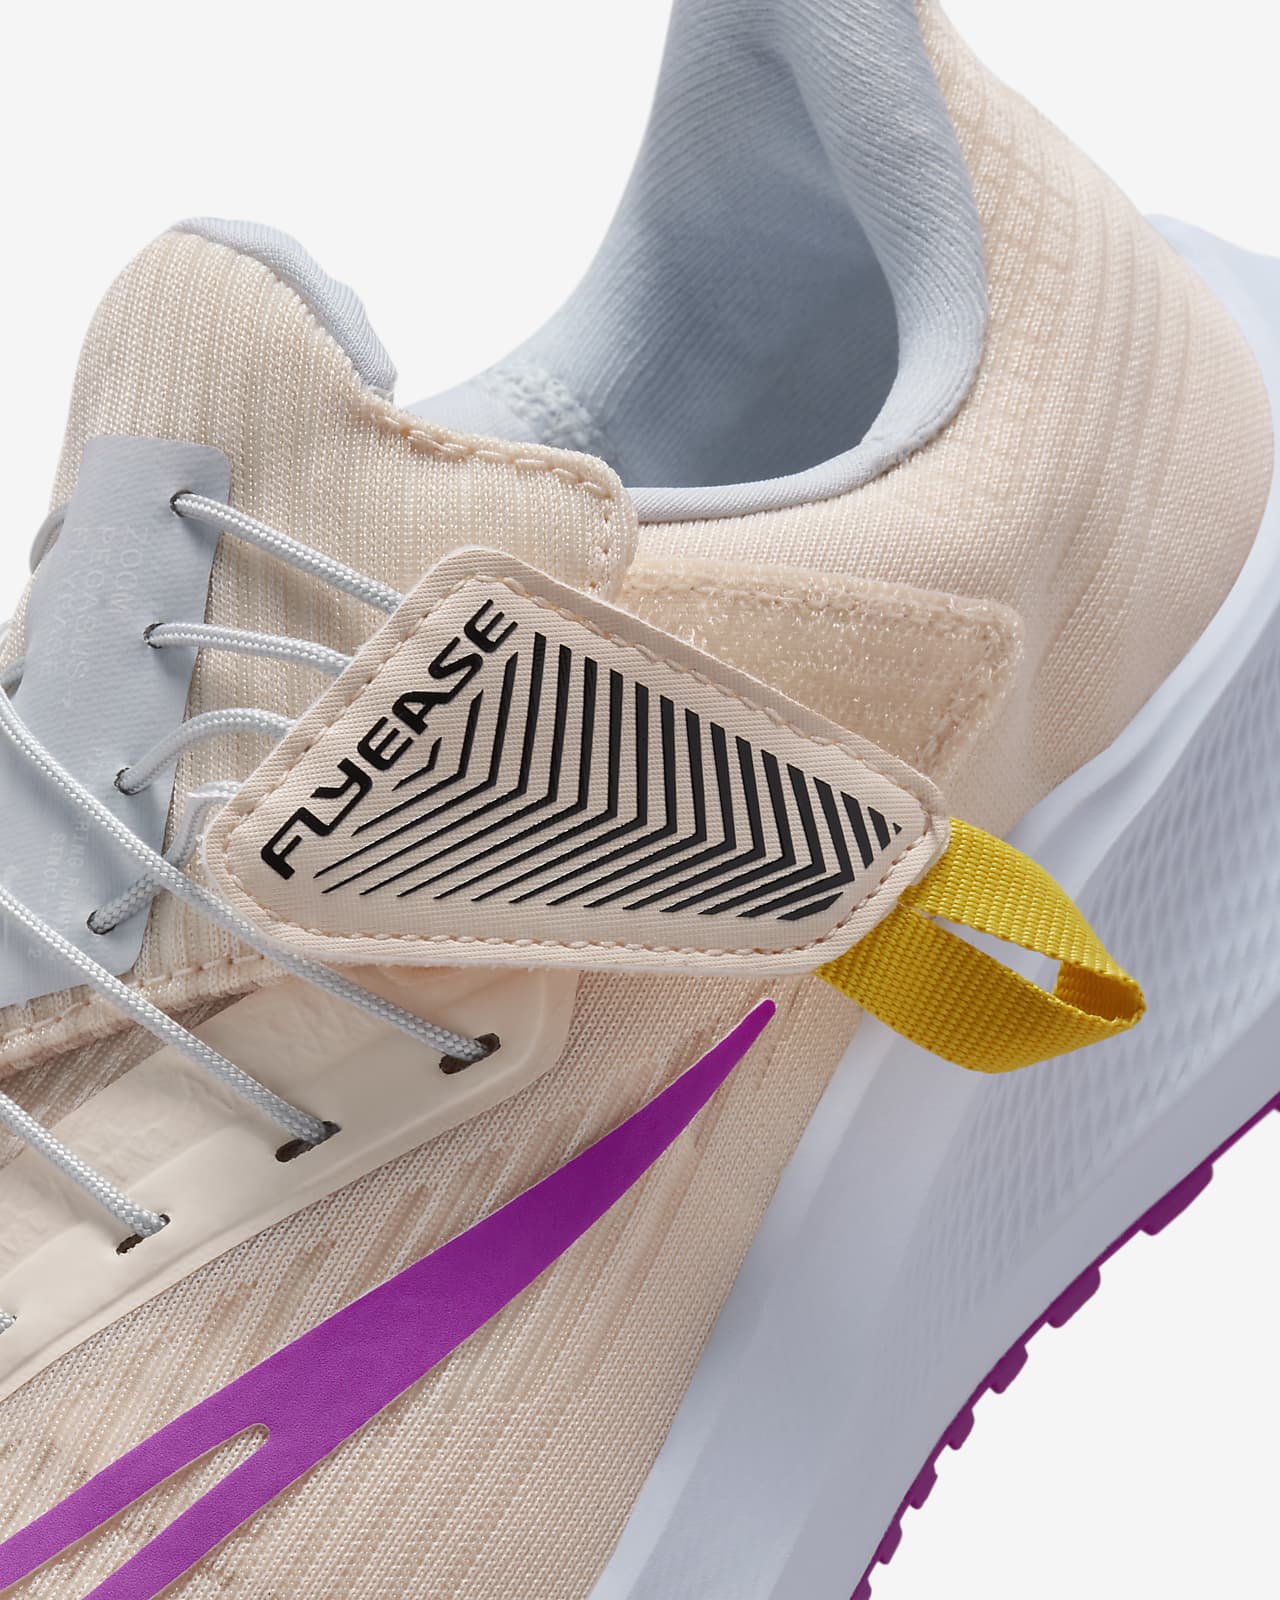 Nike Pegasus FlyEase Womens Running Shoes Review